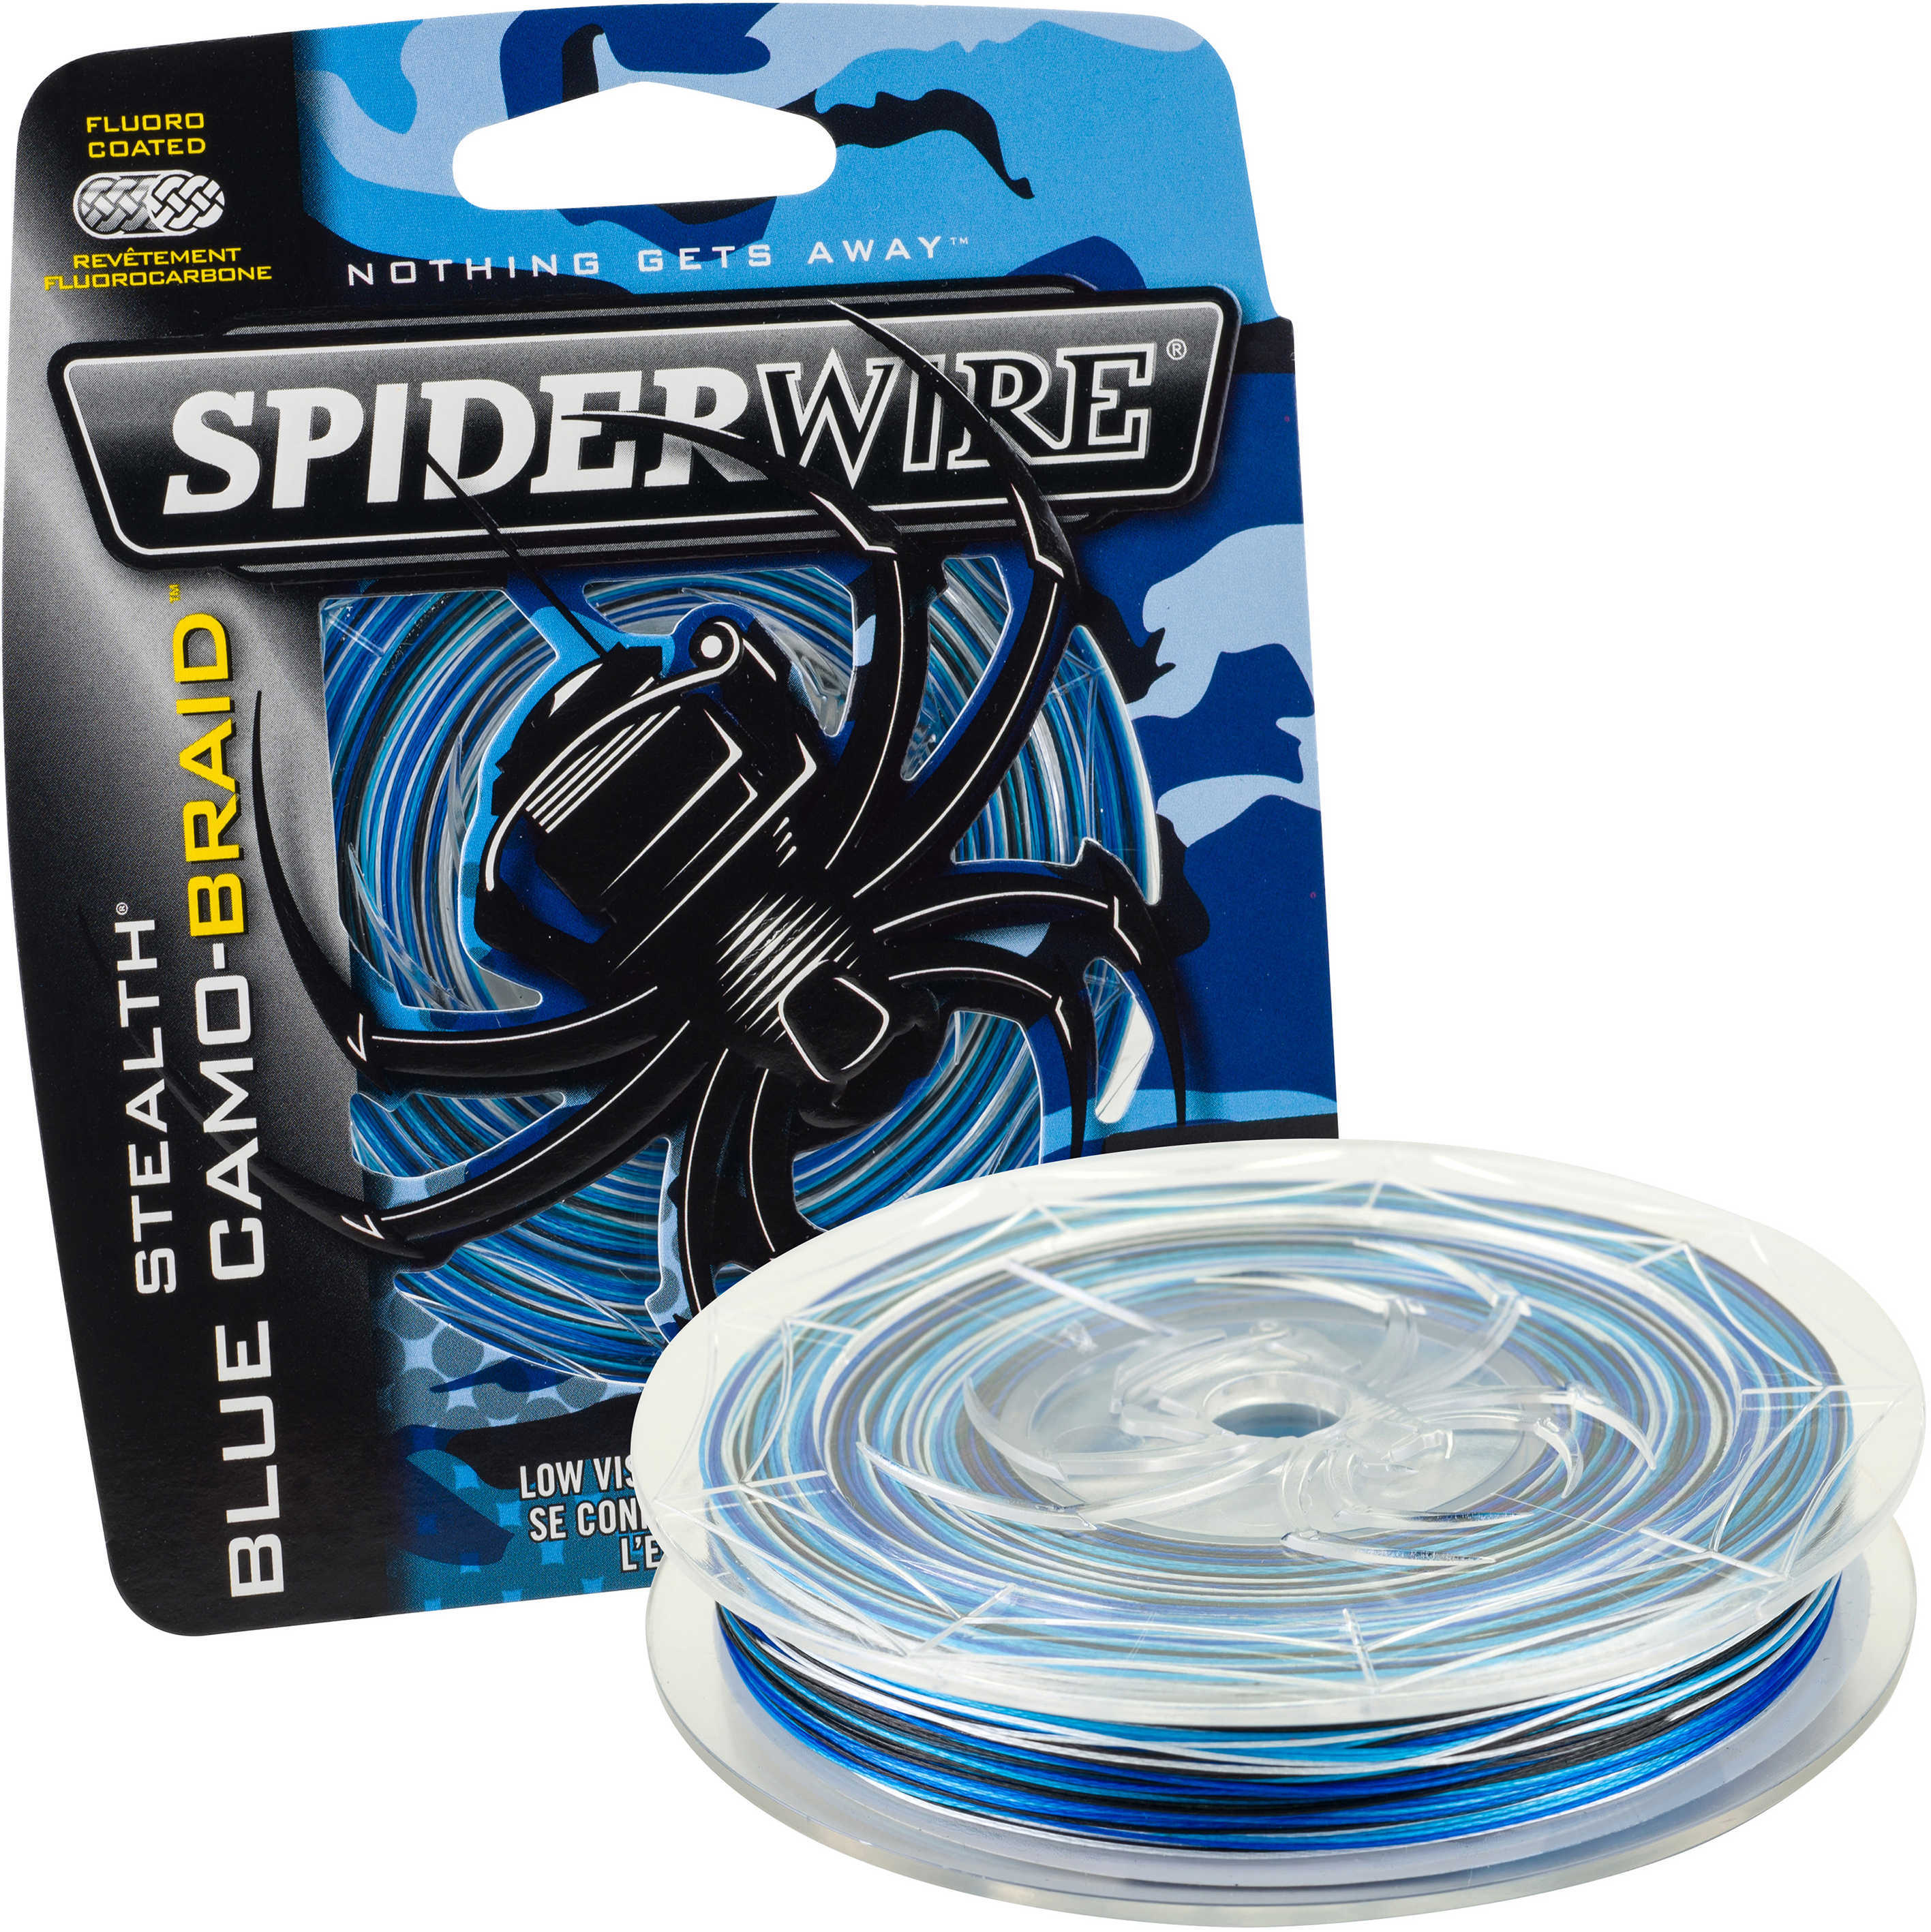 Spiderwire Stealth Braid 200 Yard lbs Strength 0.010" Diameter Blue Camo Md: 1374133